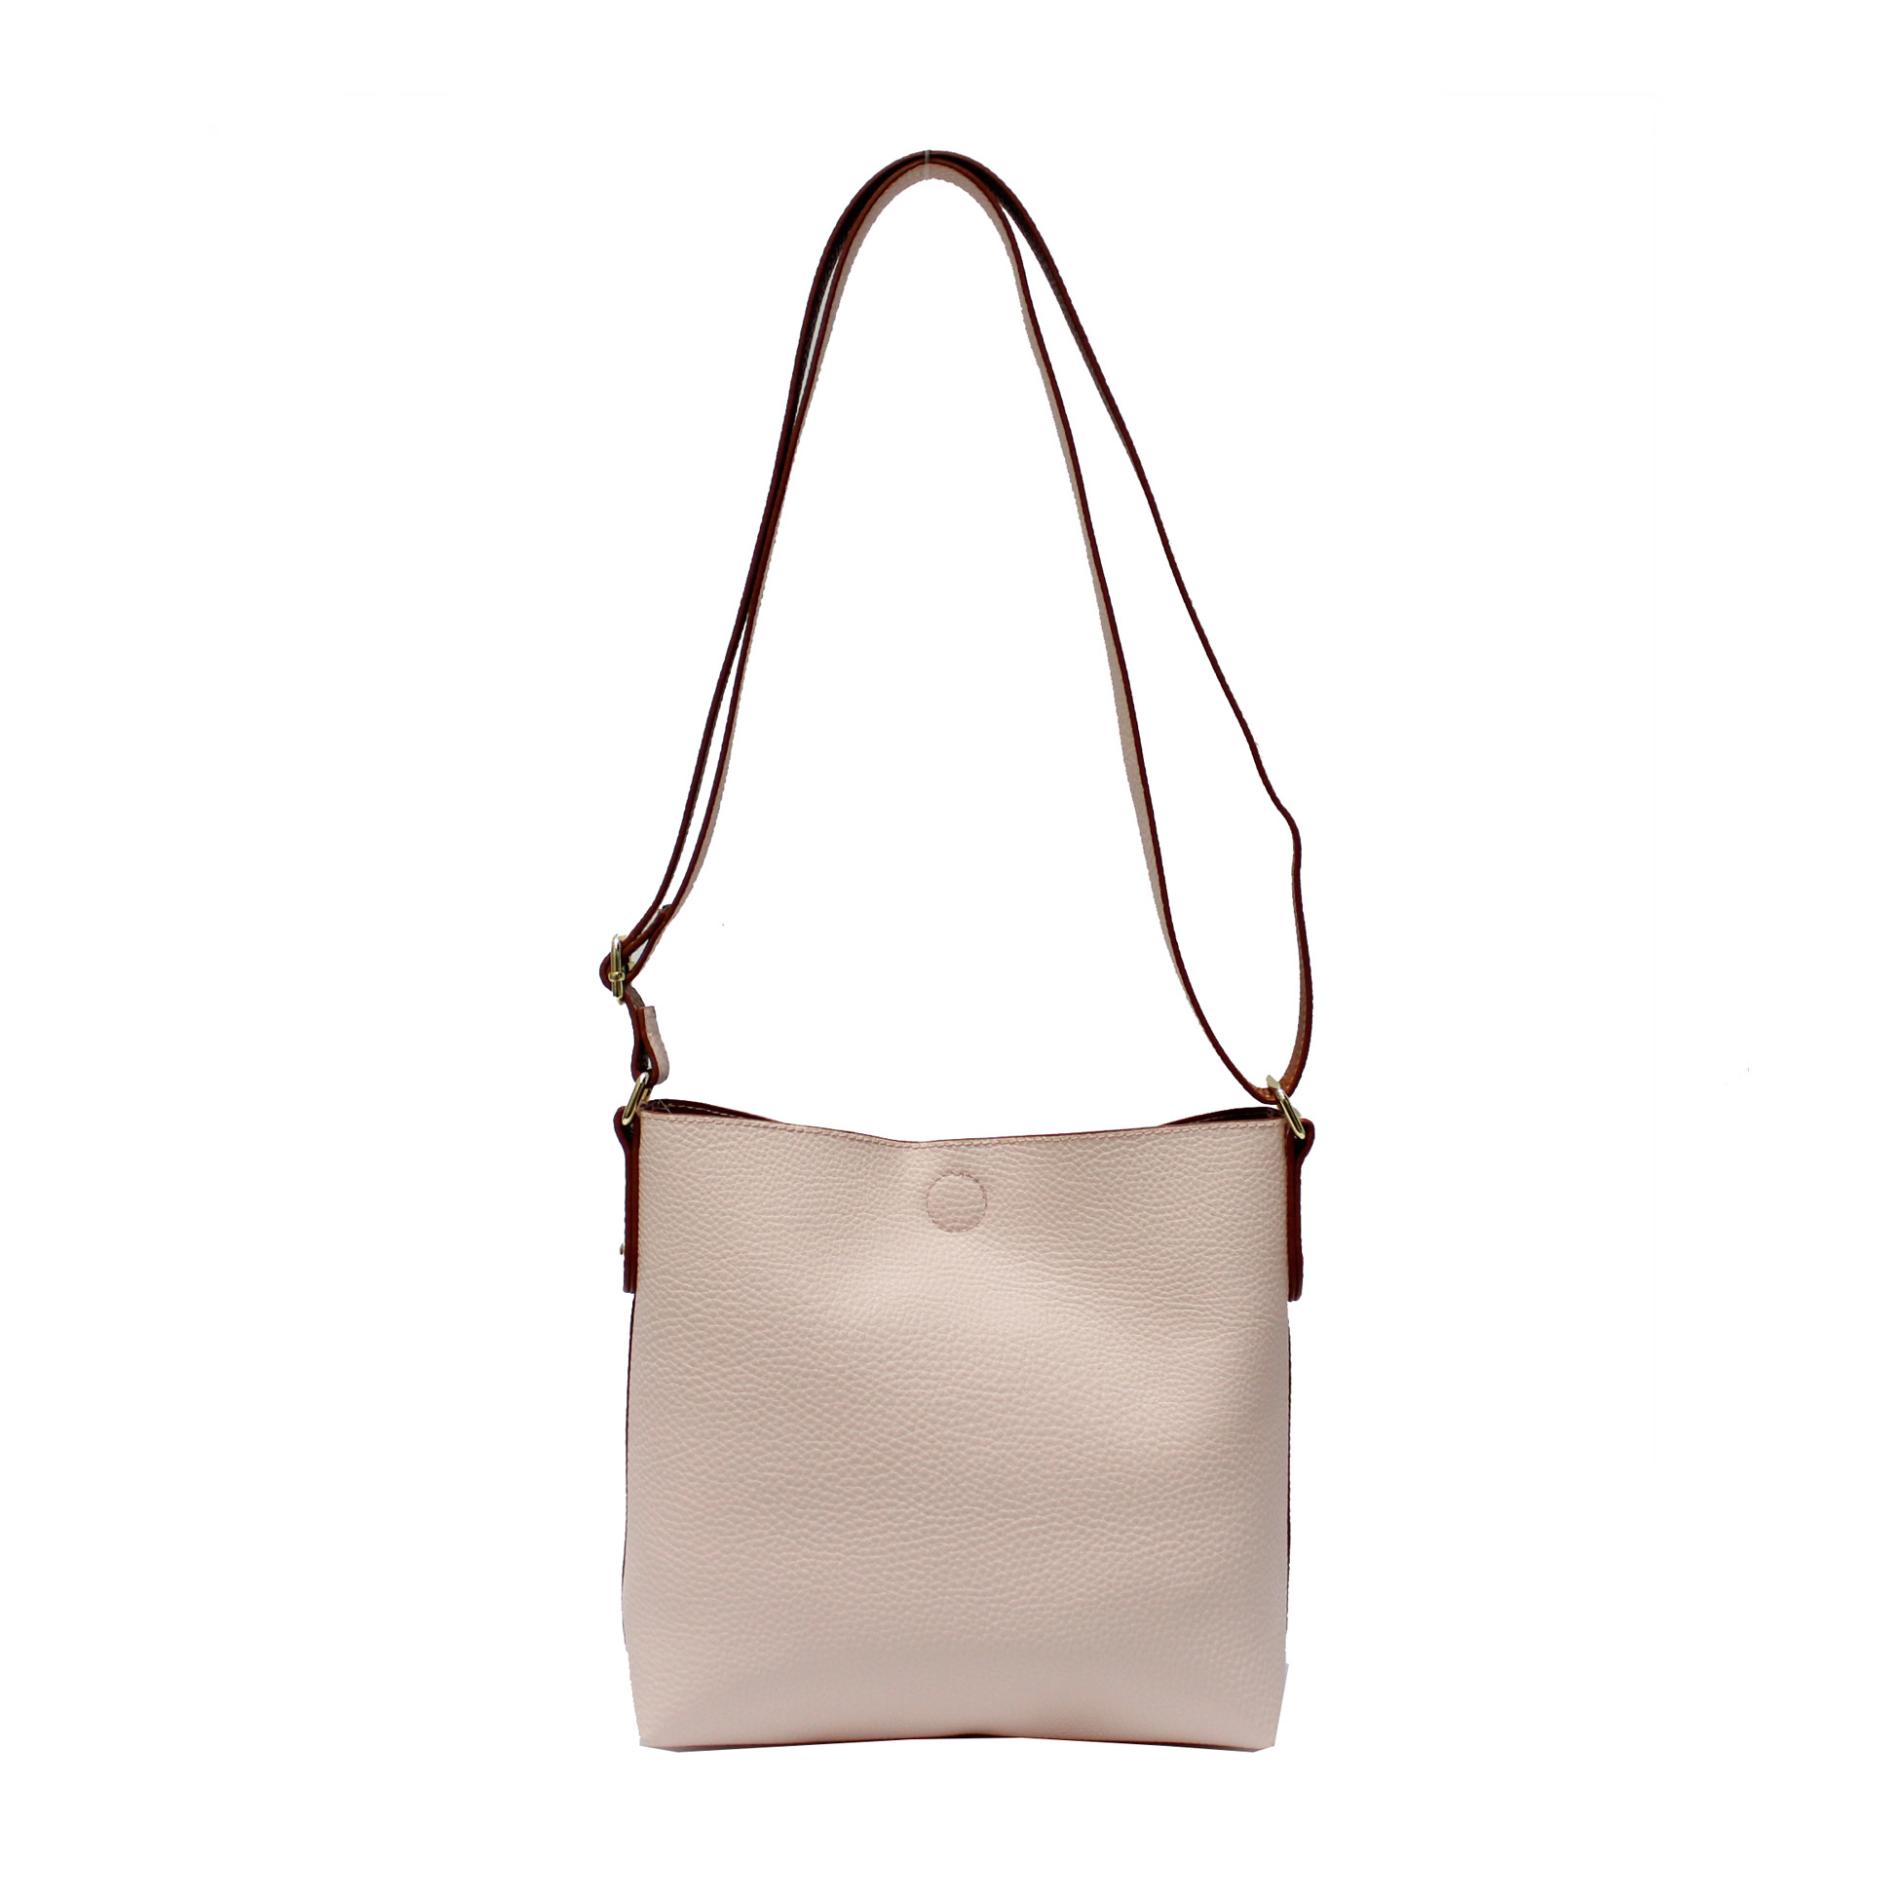 Simply Styled Women's Crossbody Handbag